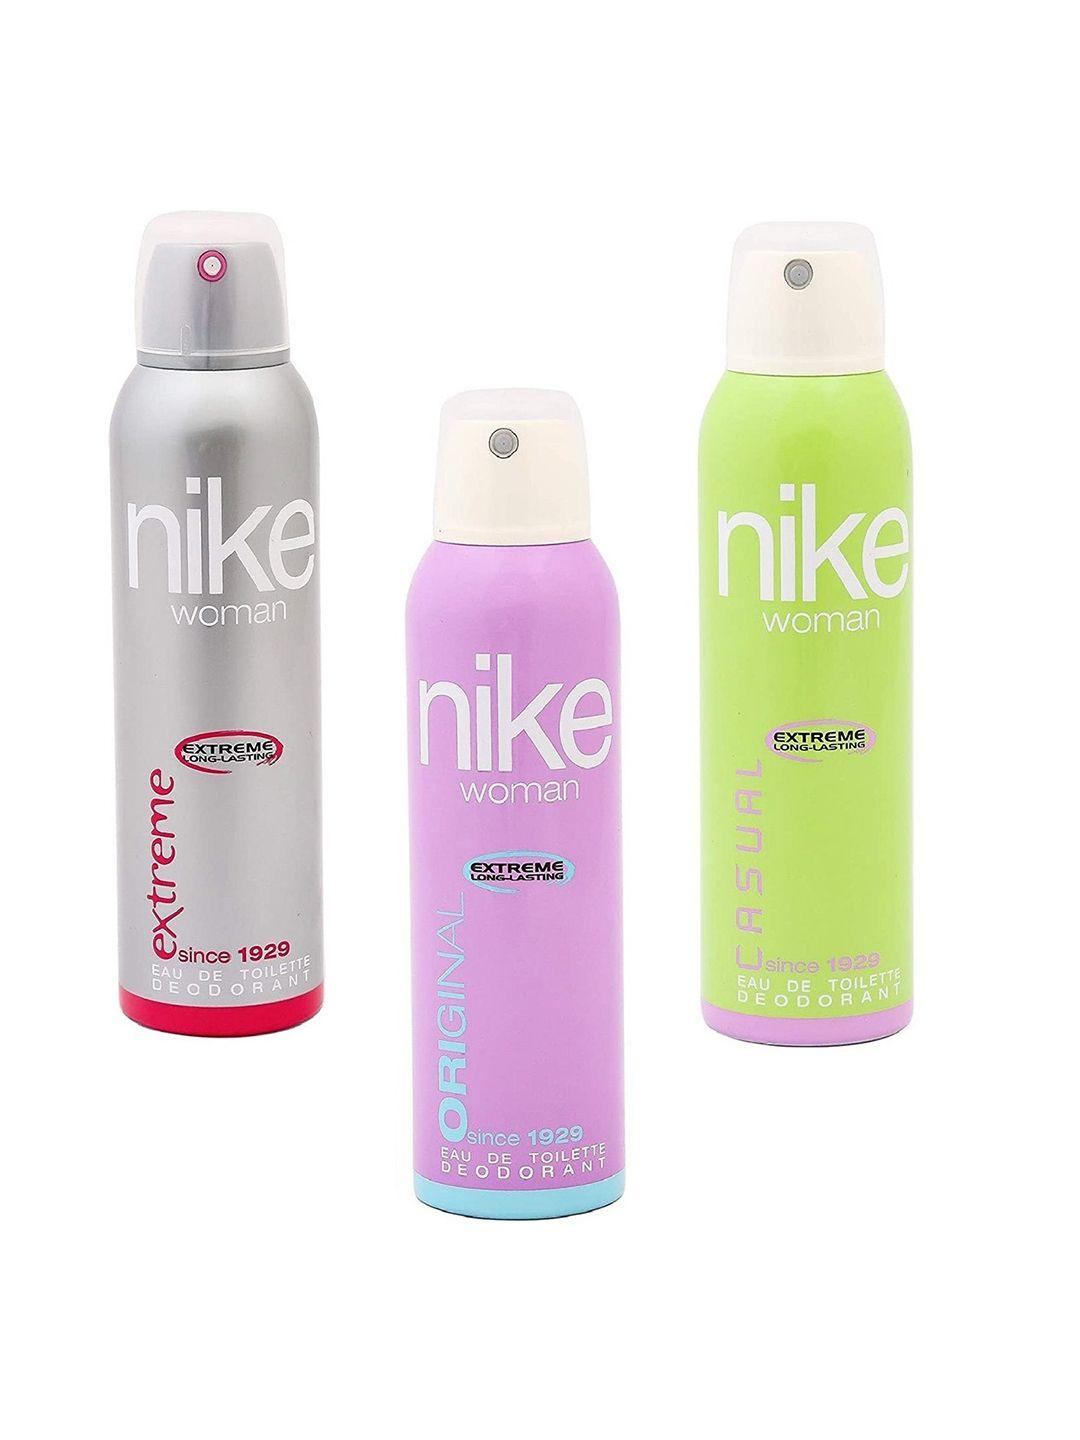 nike pack of 3 woman extreme/original/casual deodorant - 200 ml each